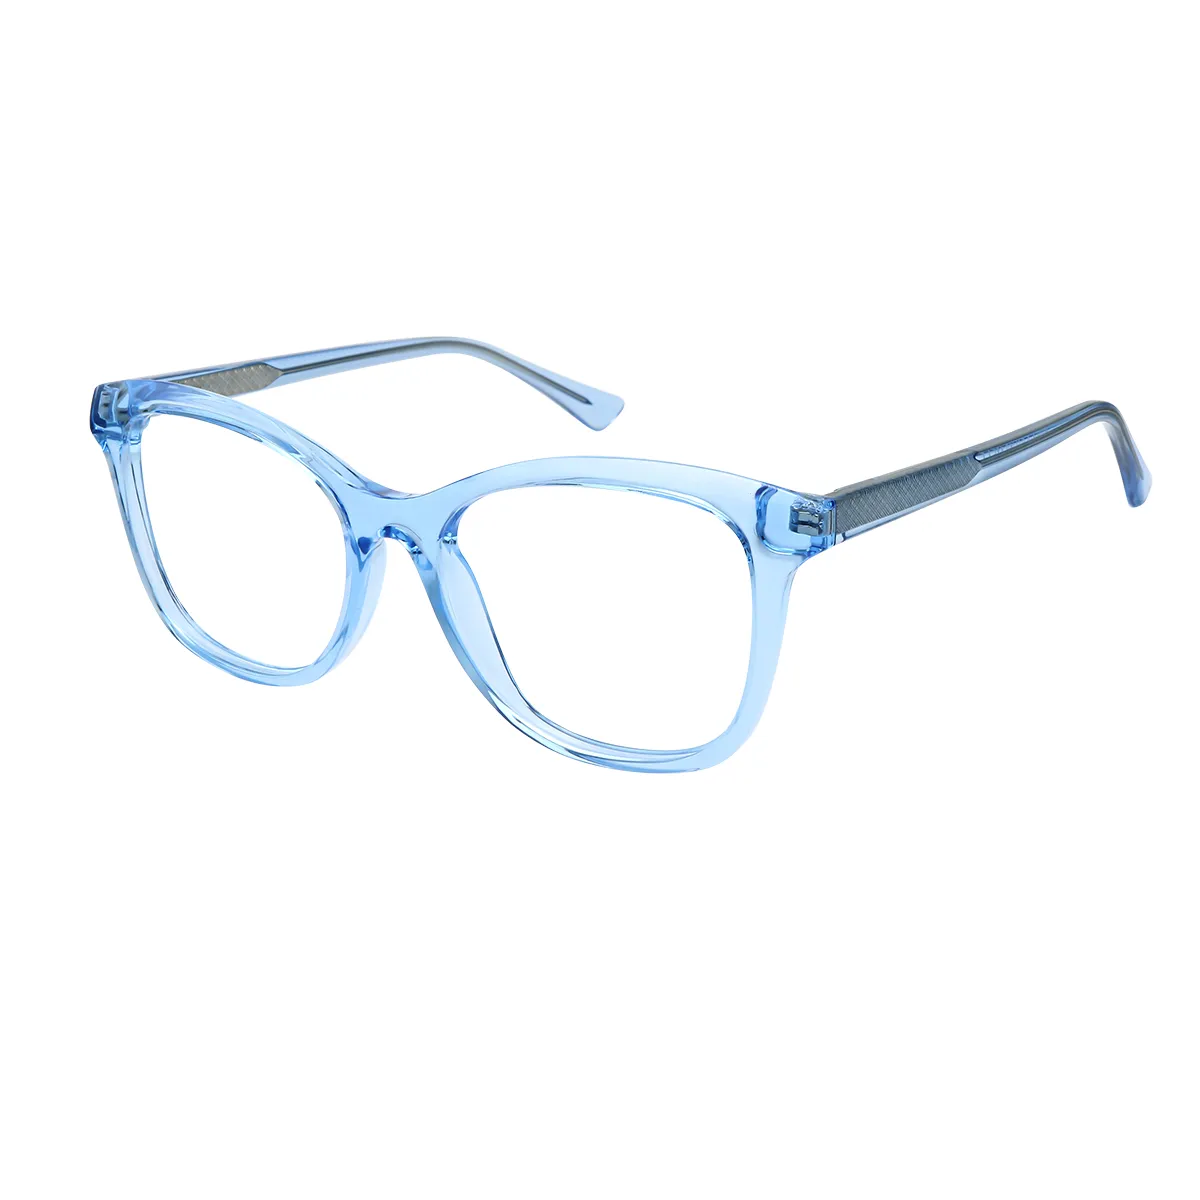 Lighthouse - Square Blue-Transparent Glasses for Women